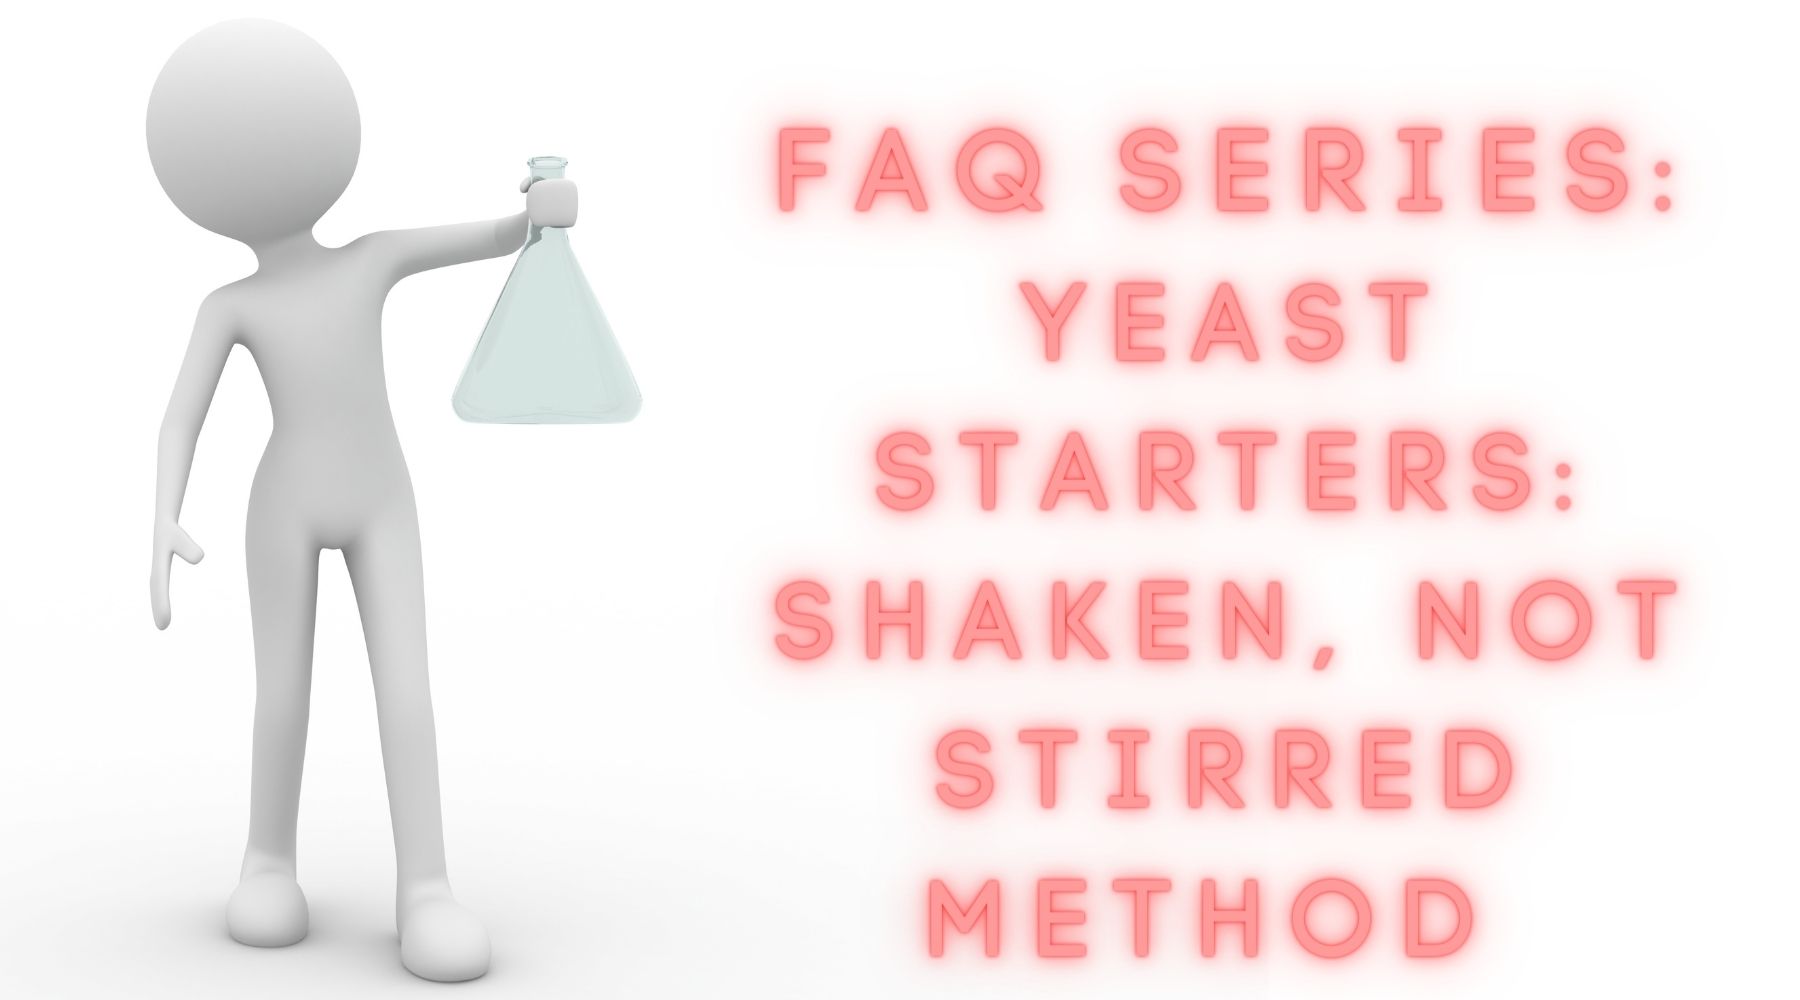 Yeast Starters: The Shaken, Not Stirred Method